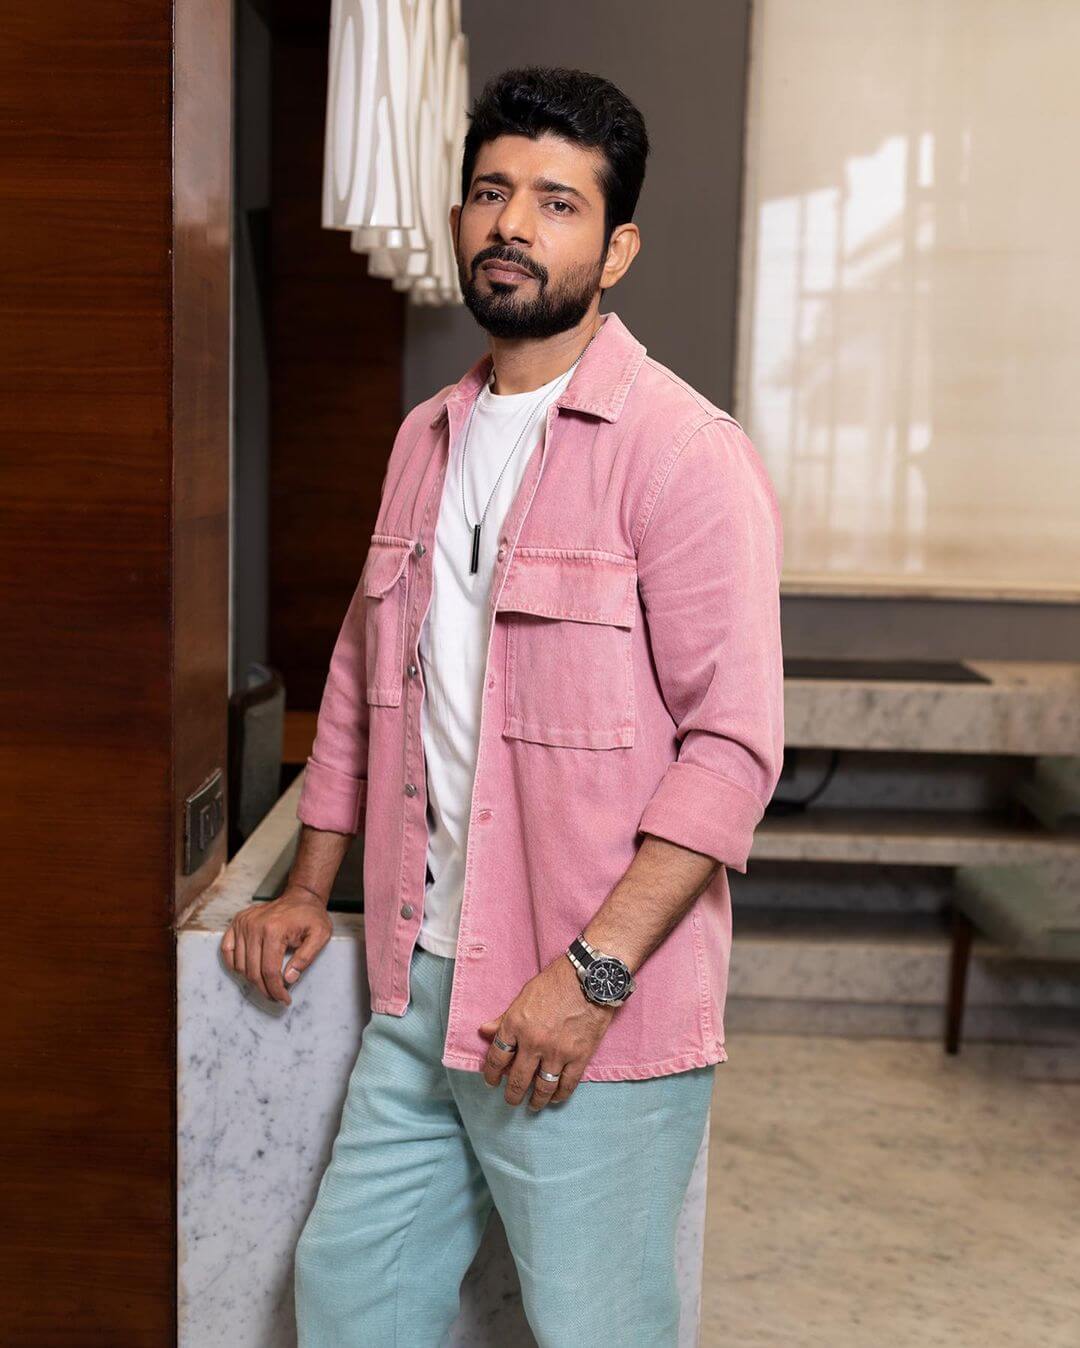 Actor Vineet Kumar Singh stylish shot in pink jacket